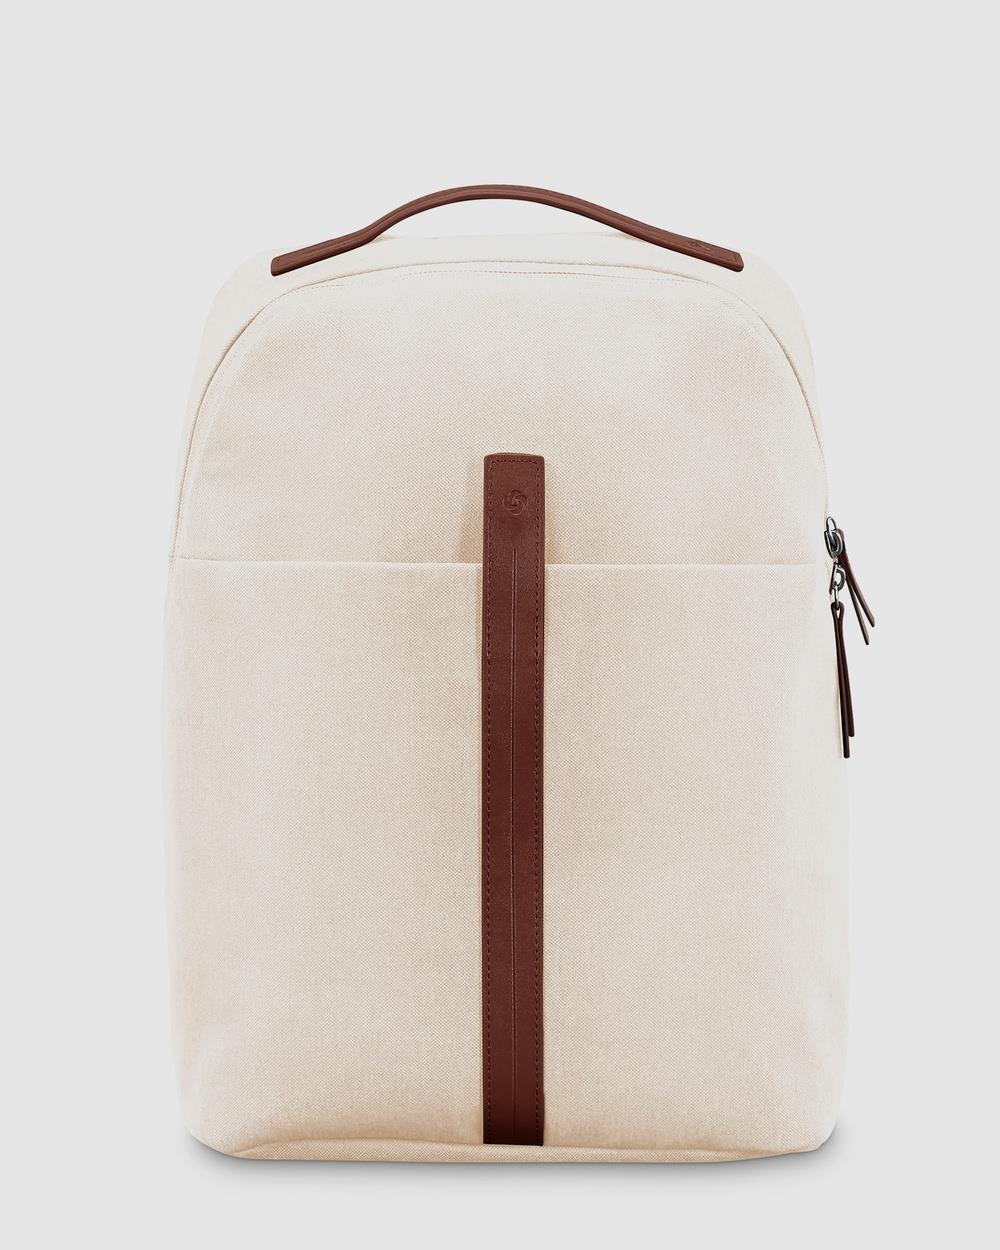 Samsonite - Virtuosa Backpack - Travel and Luggage (White) Virtuosa Backpack